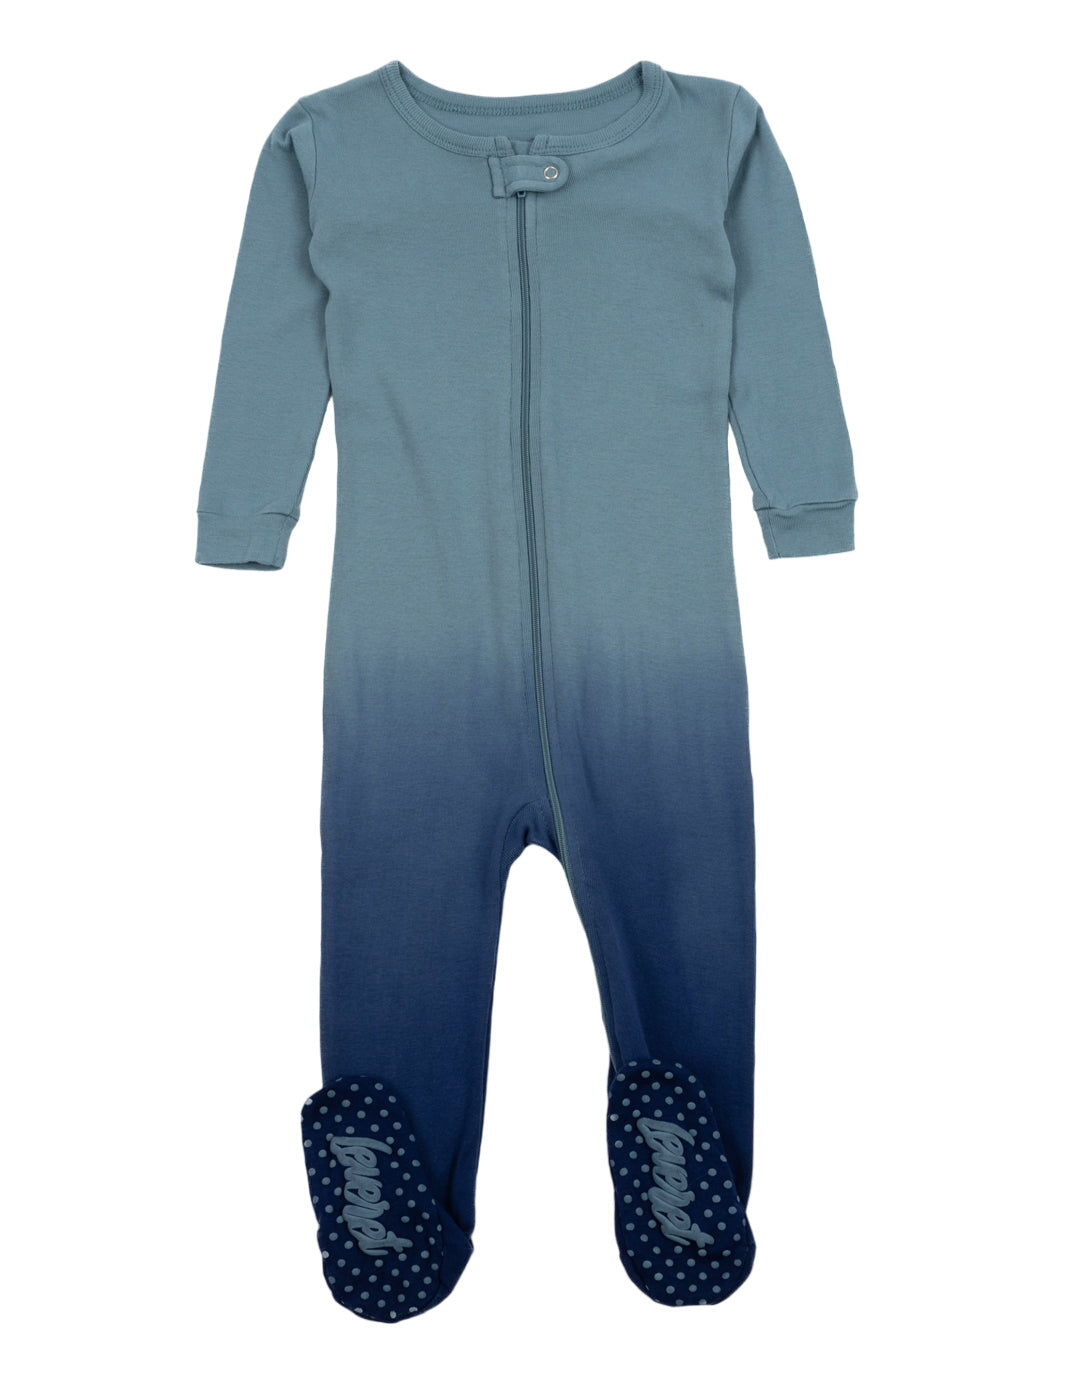 Kids Footed Blue Ombré Tie Dye Cotton Pajamas